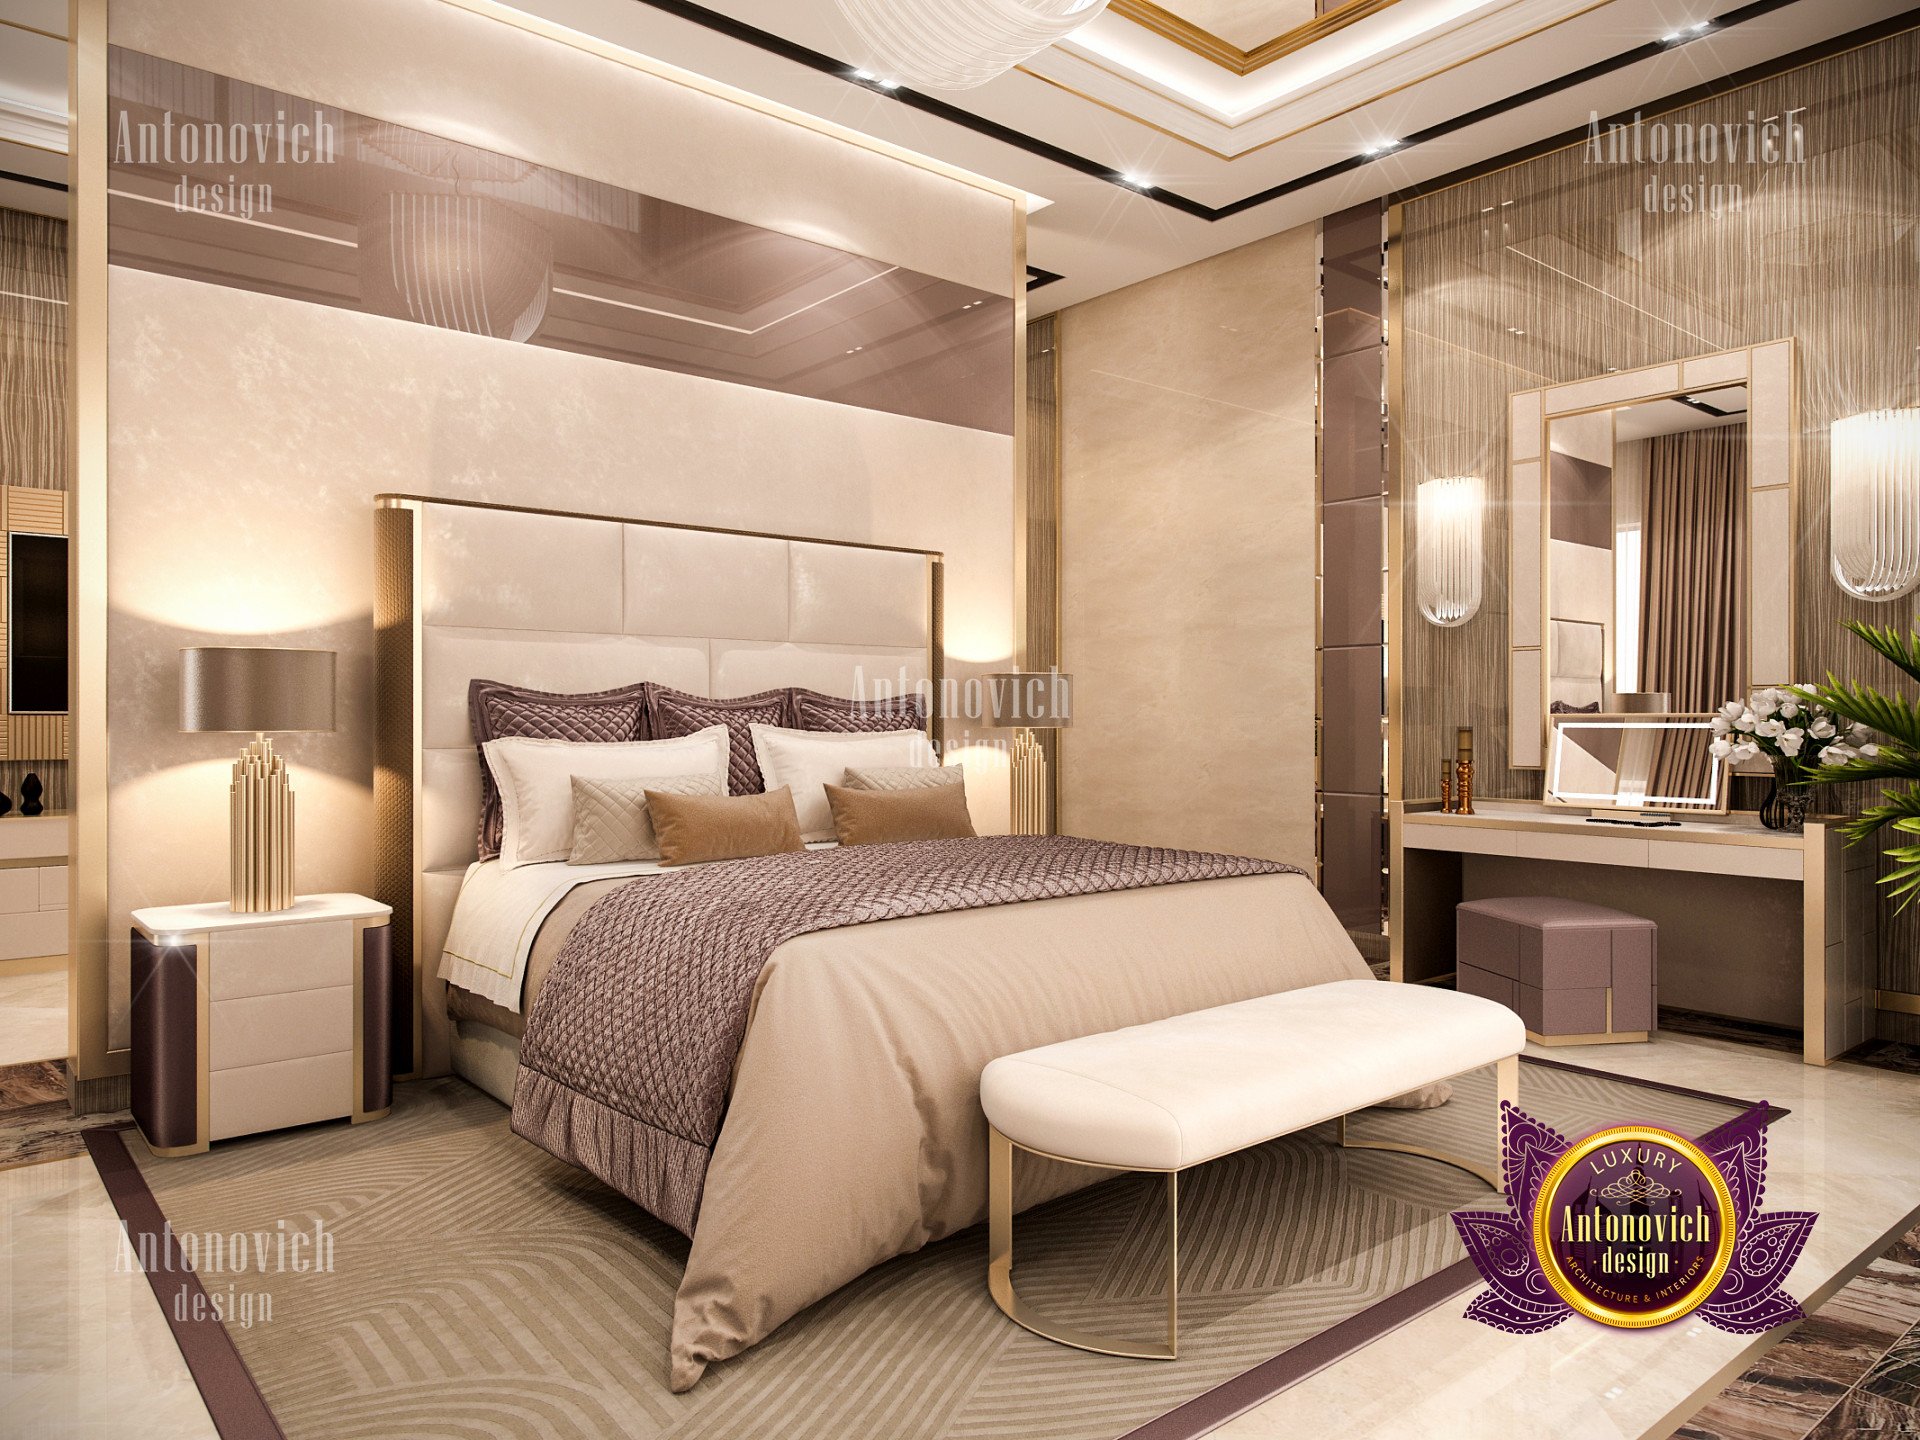 Nice bedroom interior - luxury interior design company in